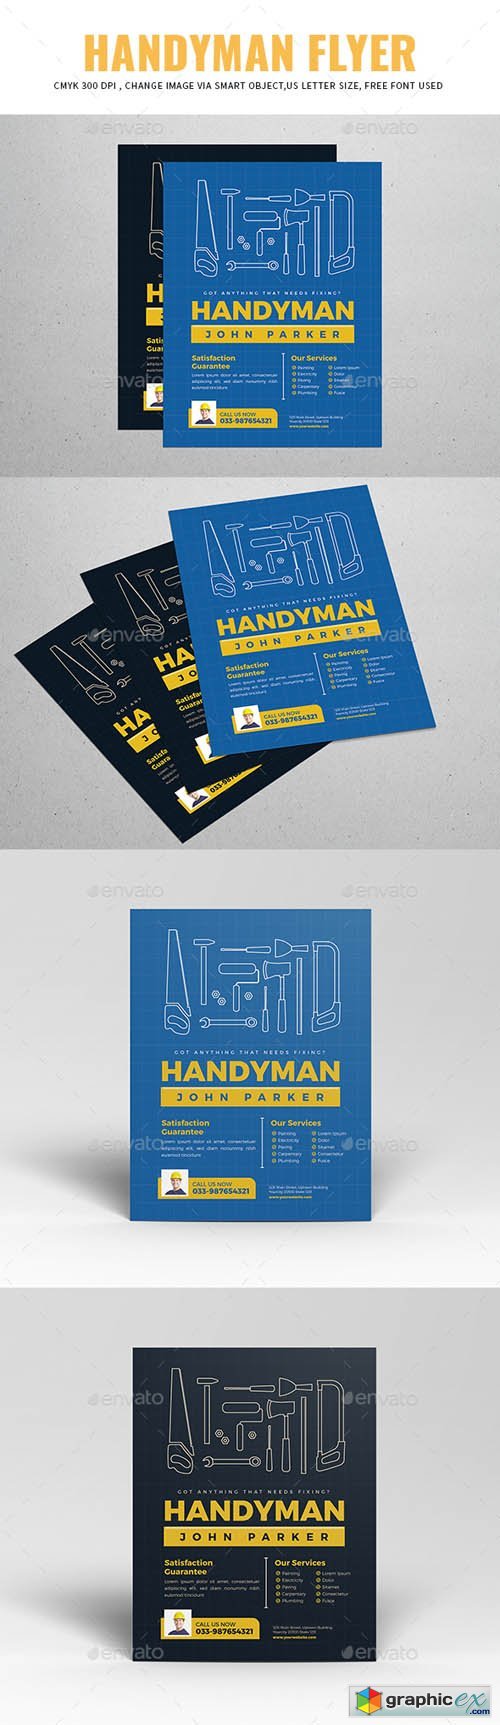 Handyman Flyer